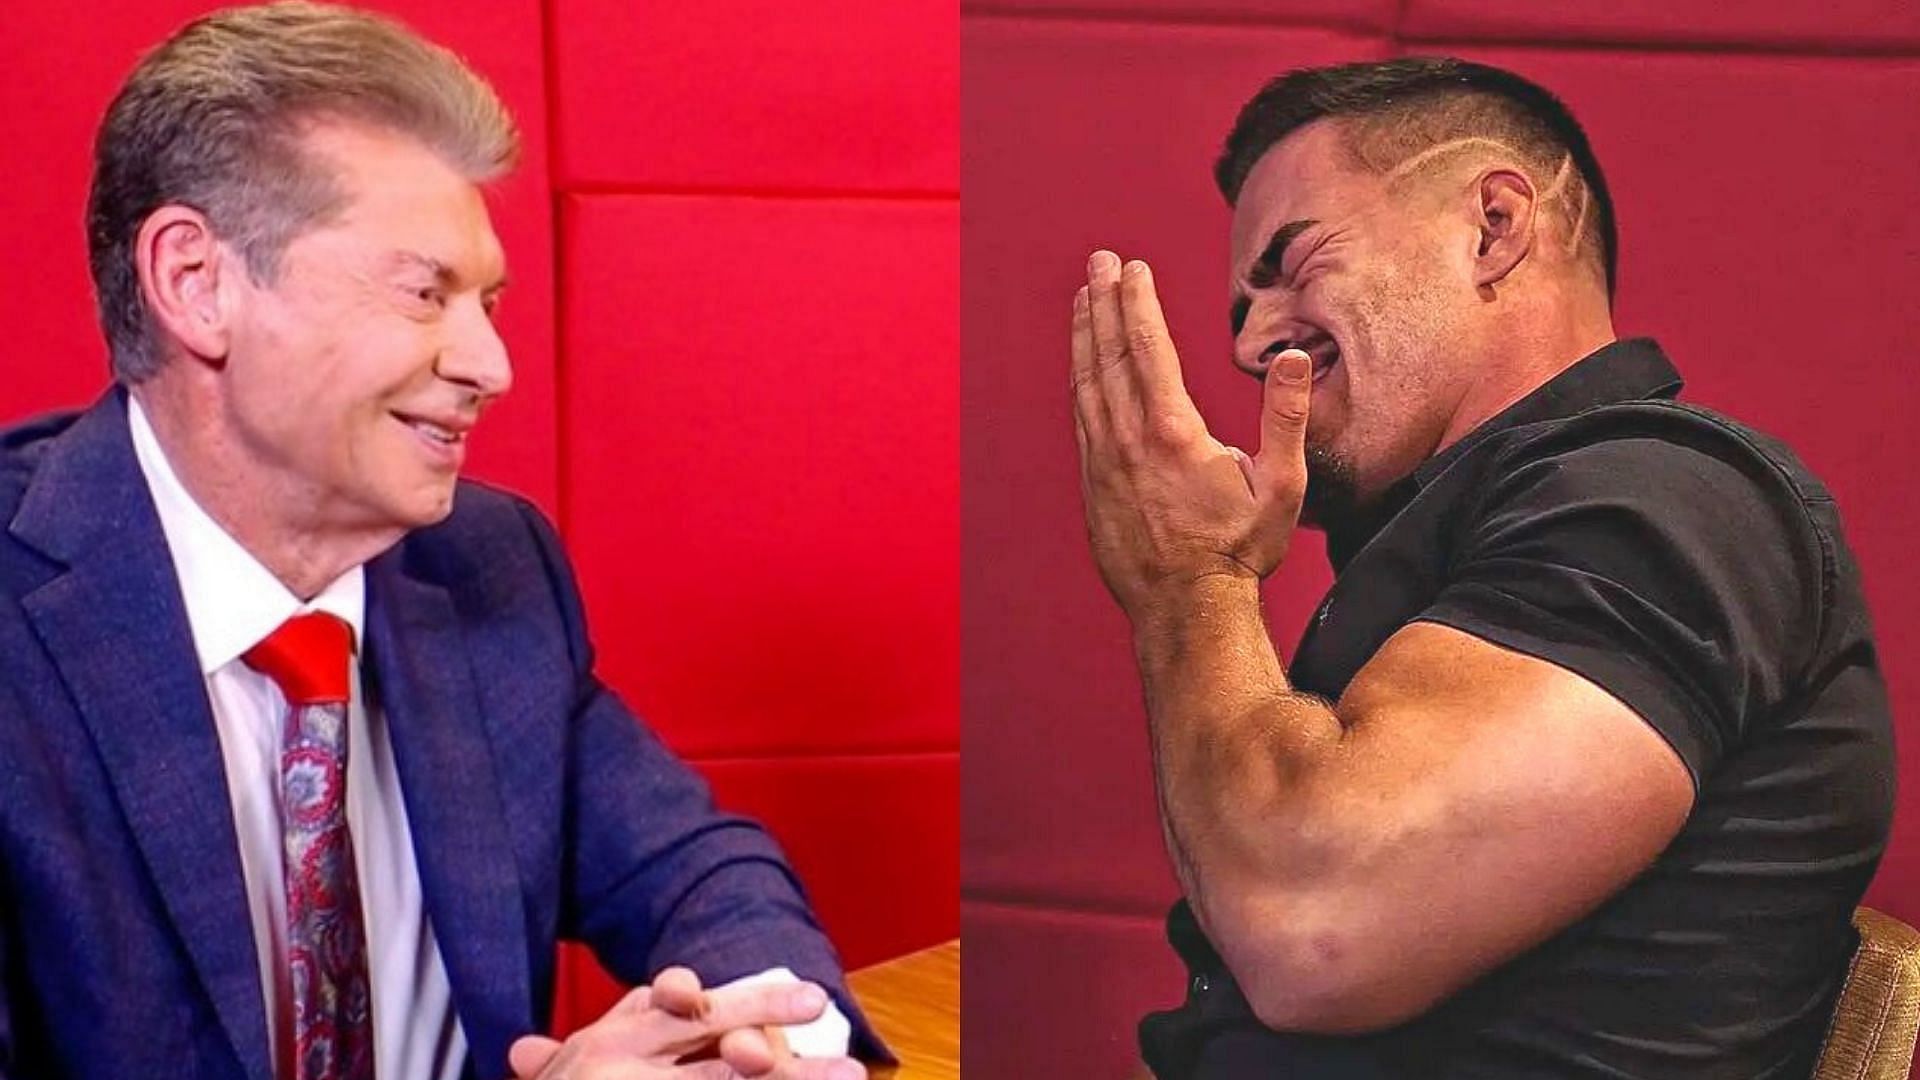 Vince McMahon slapped Austin Theory on WWE RAW